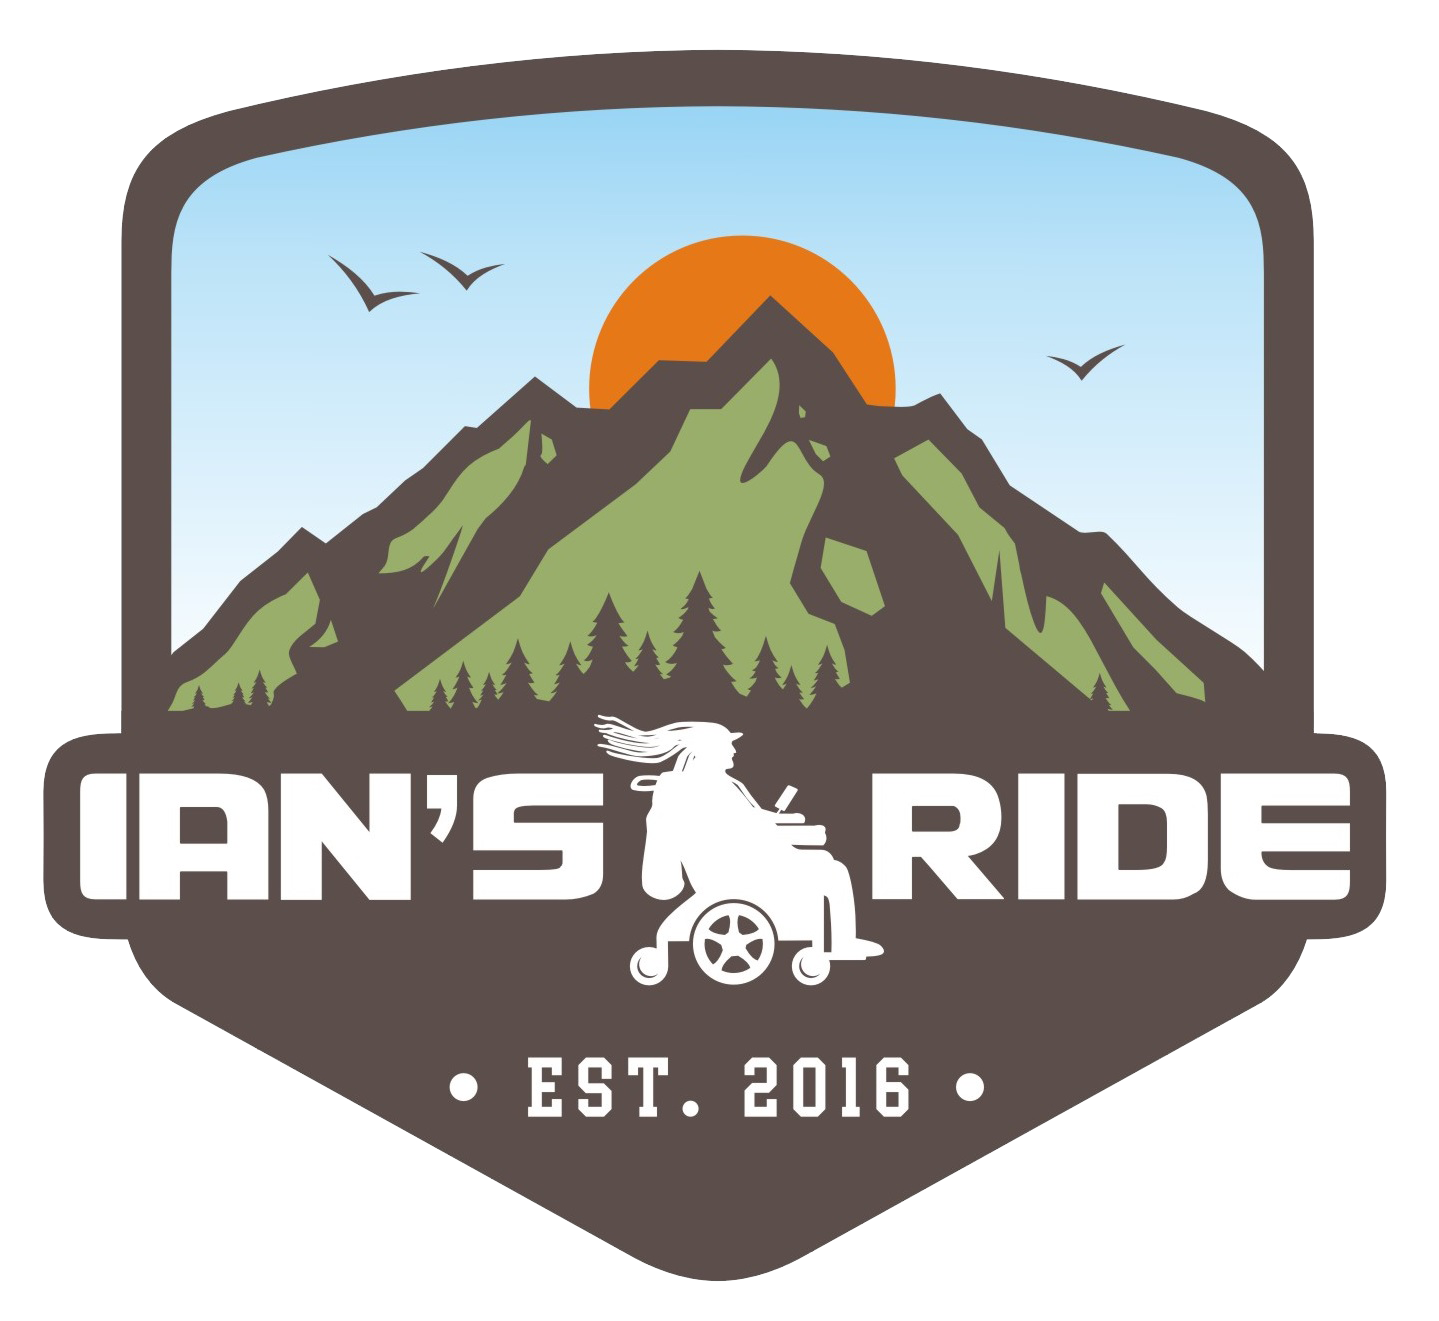 Ian-s-Ride-single-transparent.png